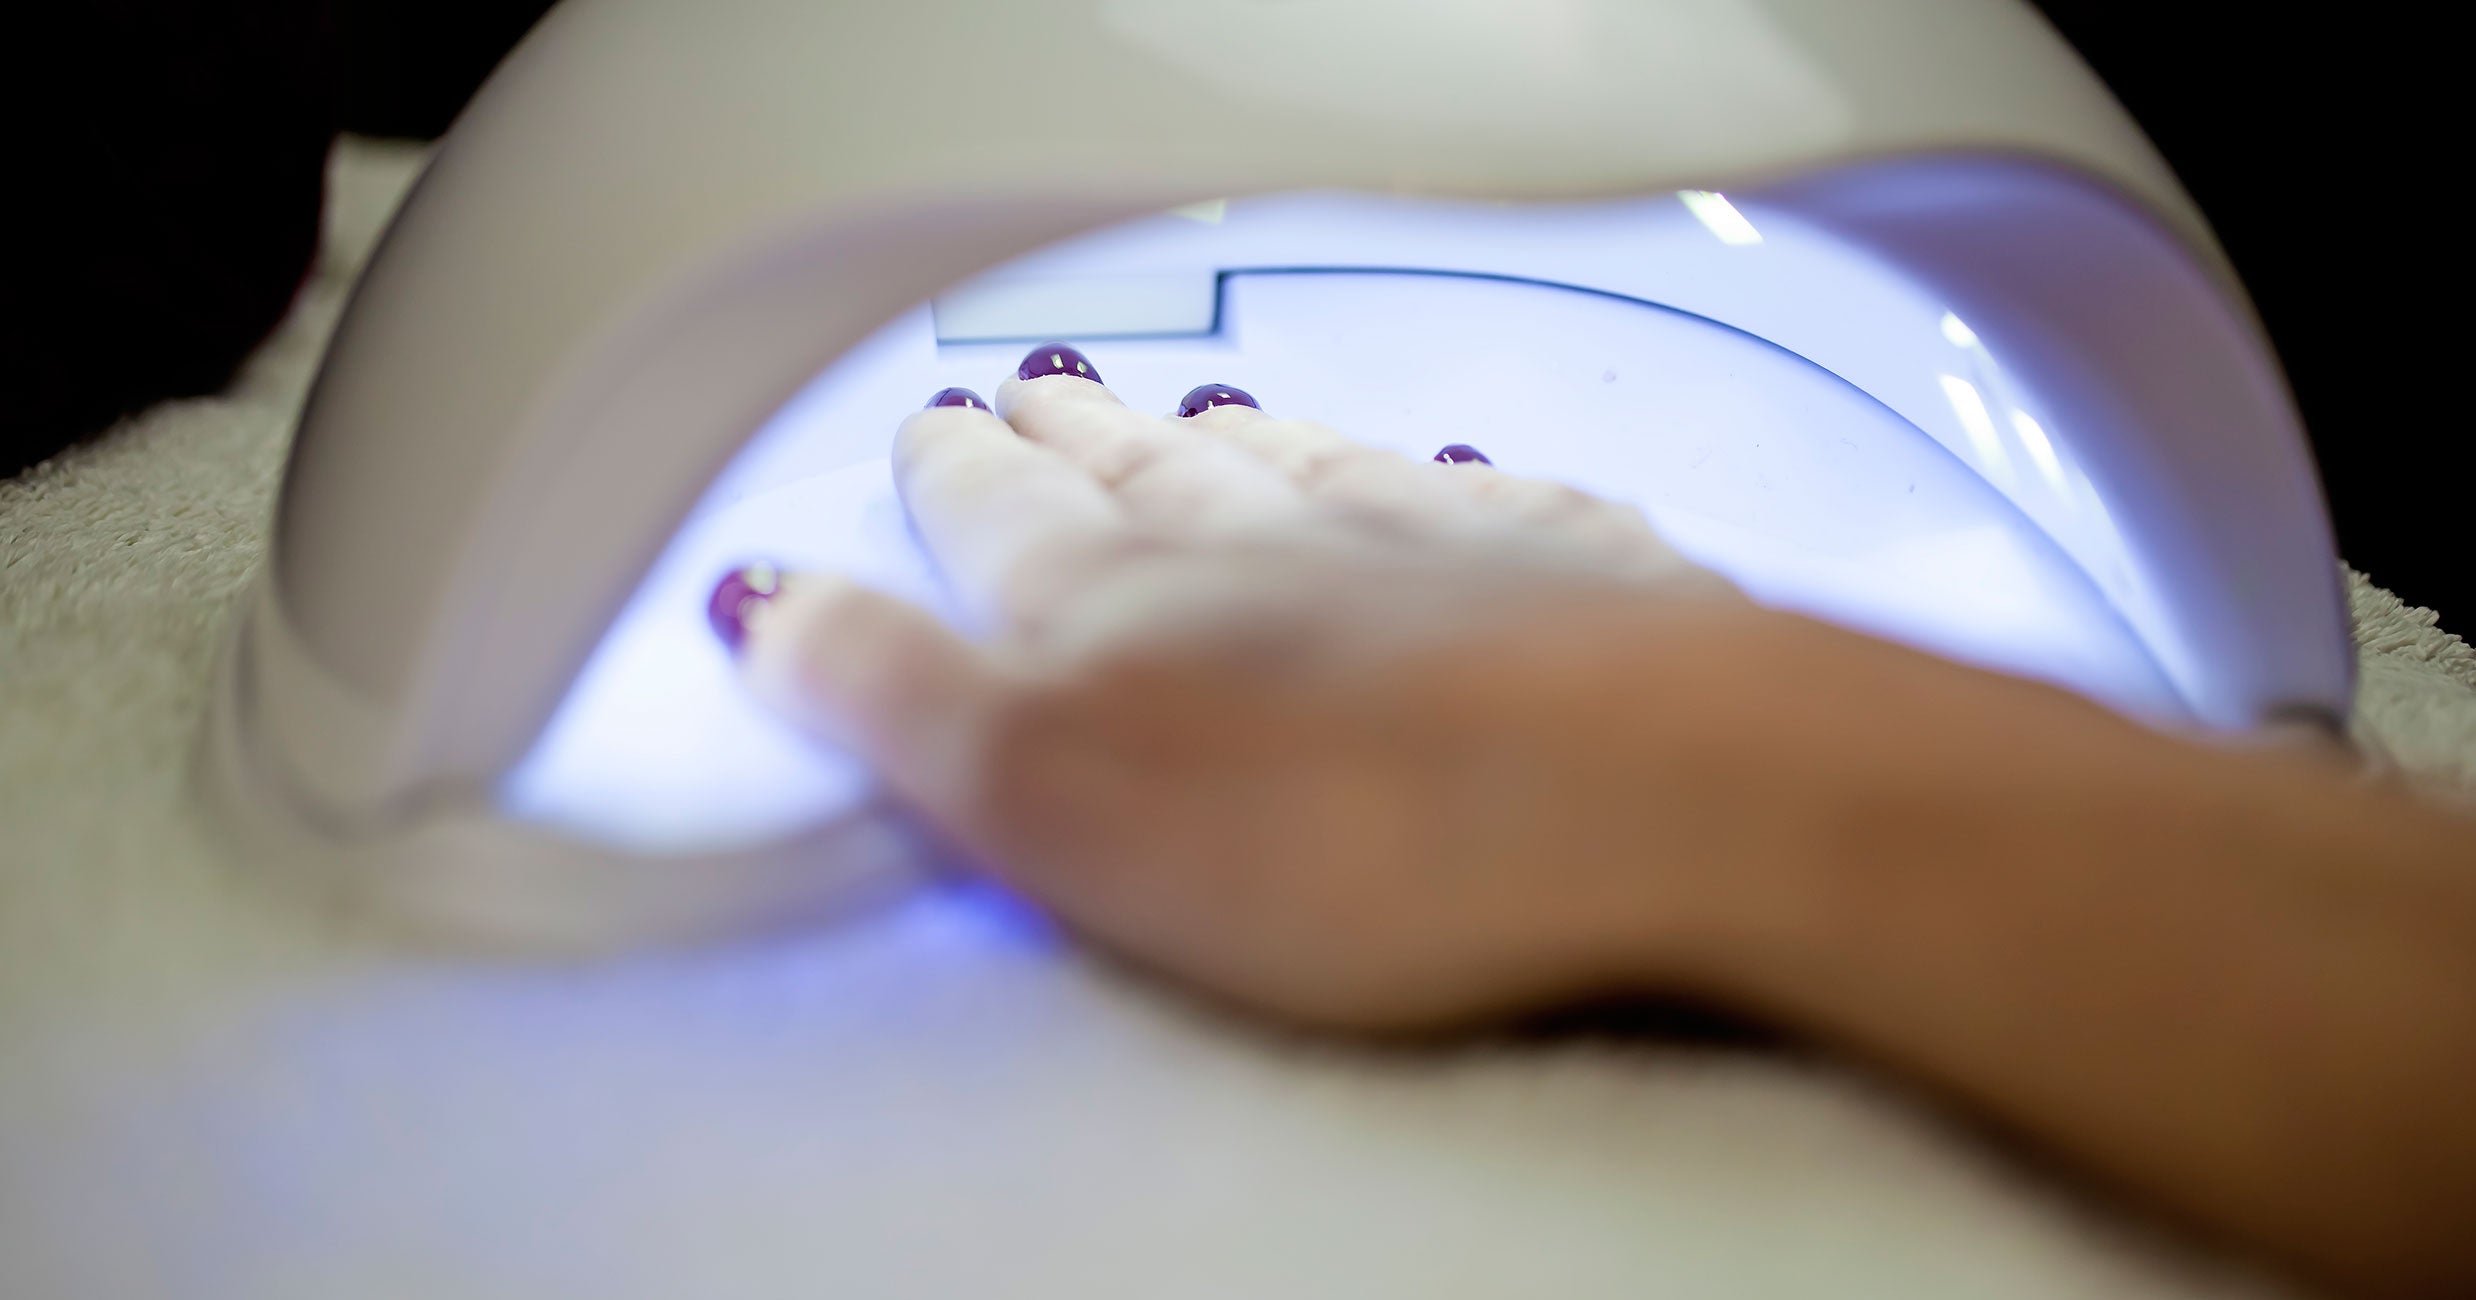 Should I Stop Getting Gel Manicures? Experts Unpack The Radiation Risks